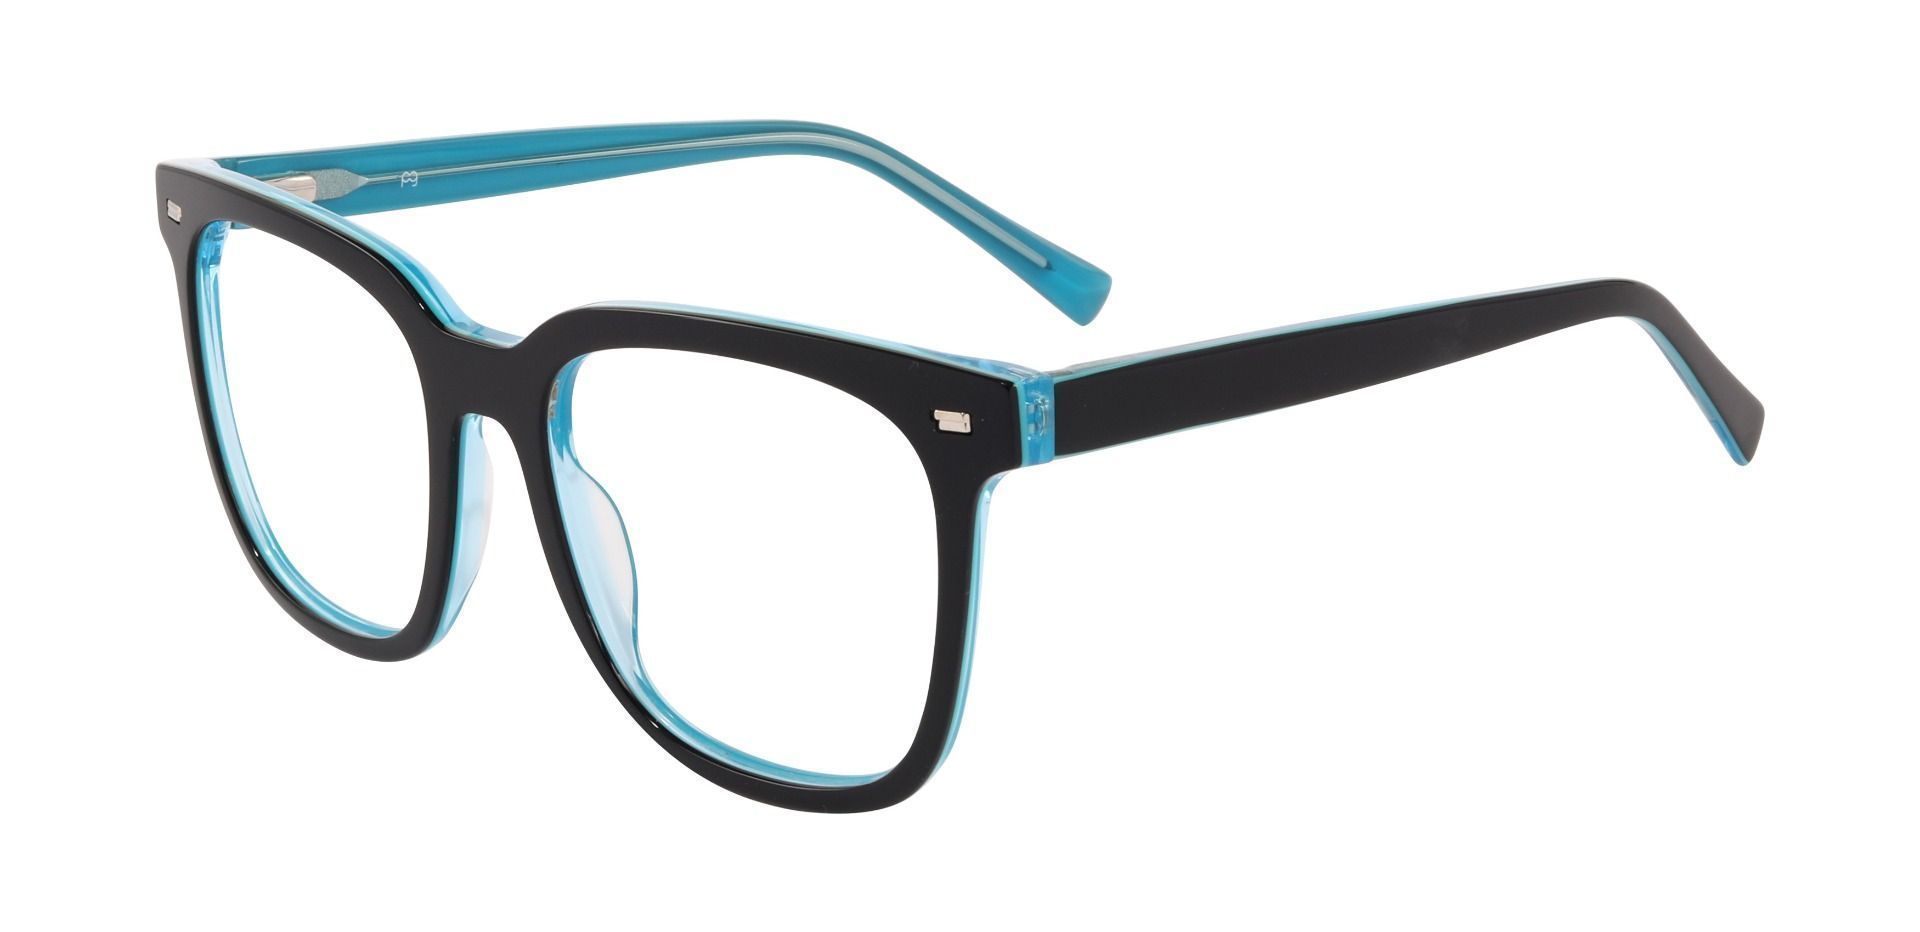 Horton Oversized Square Prescription Glasses - Black